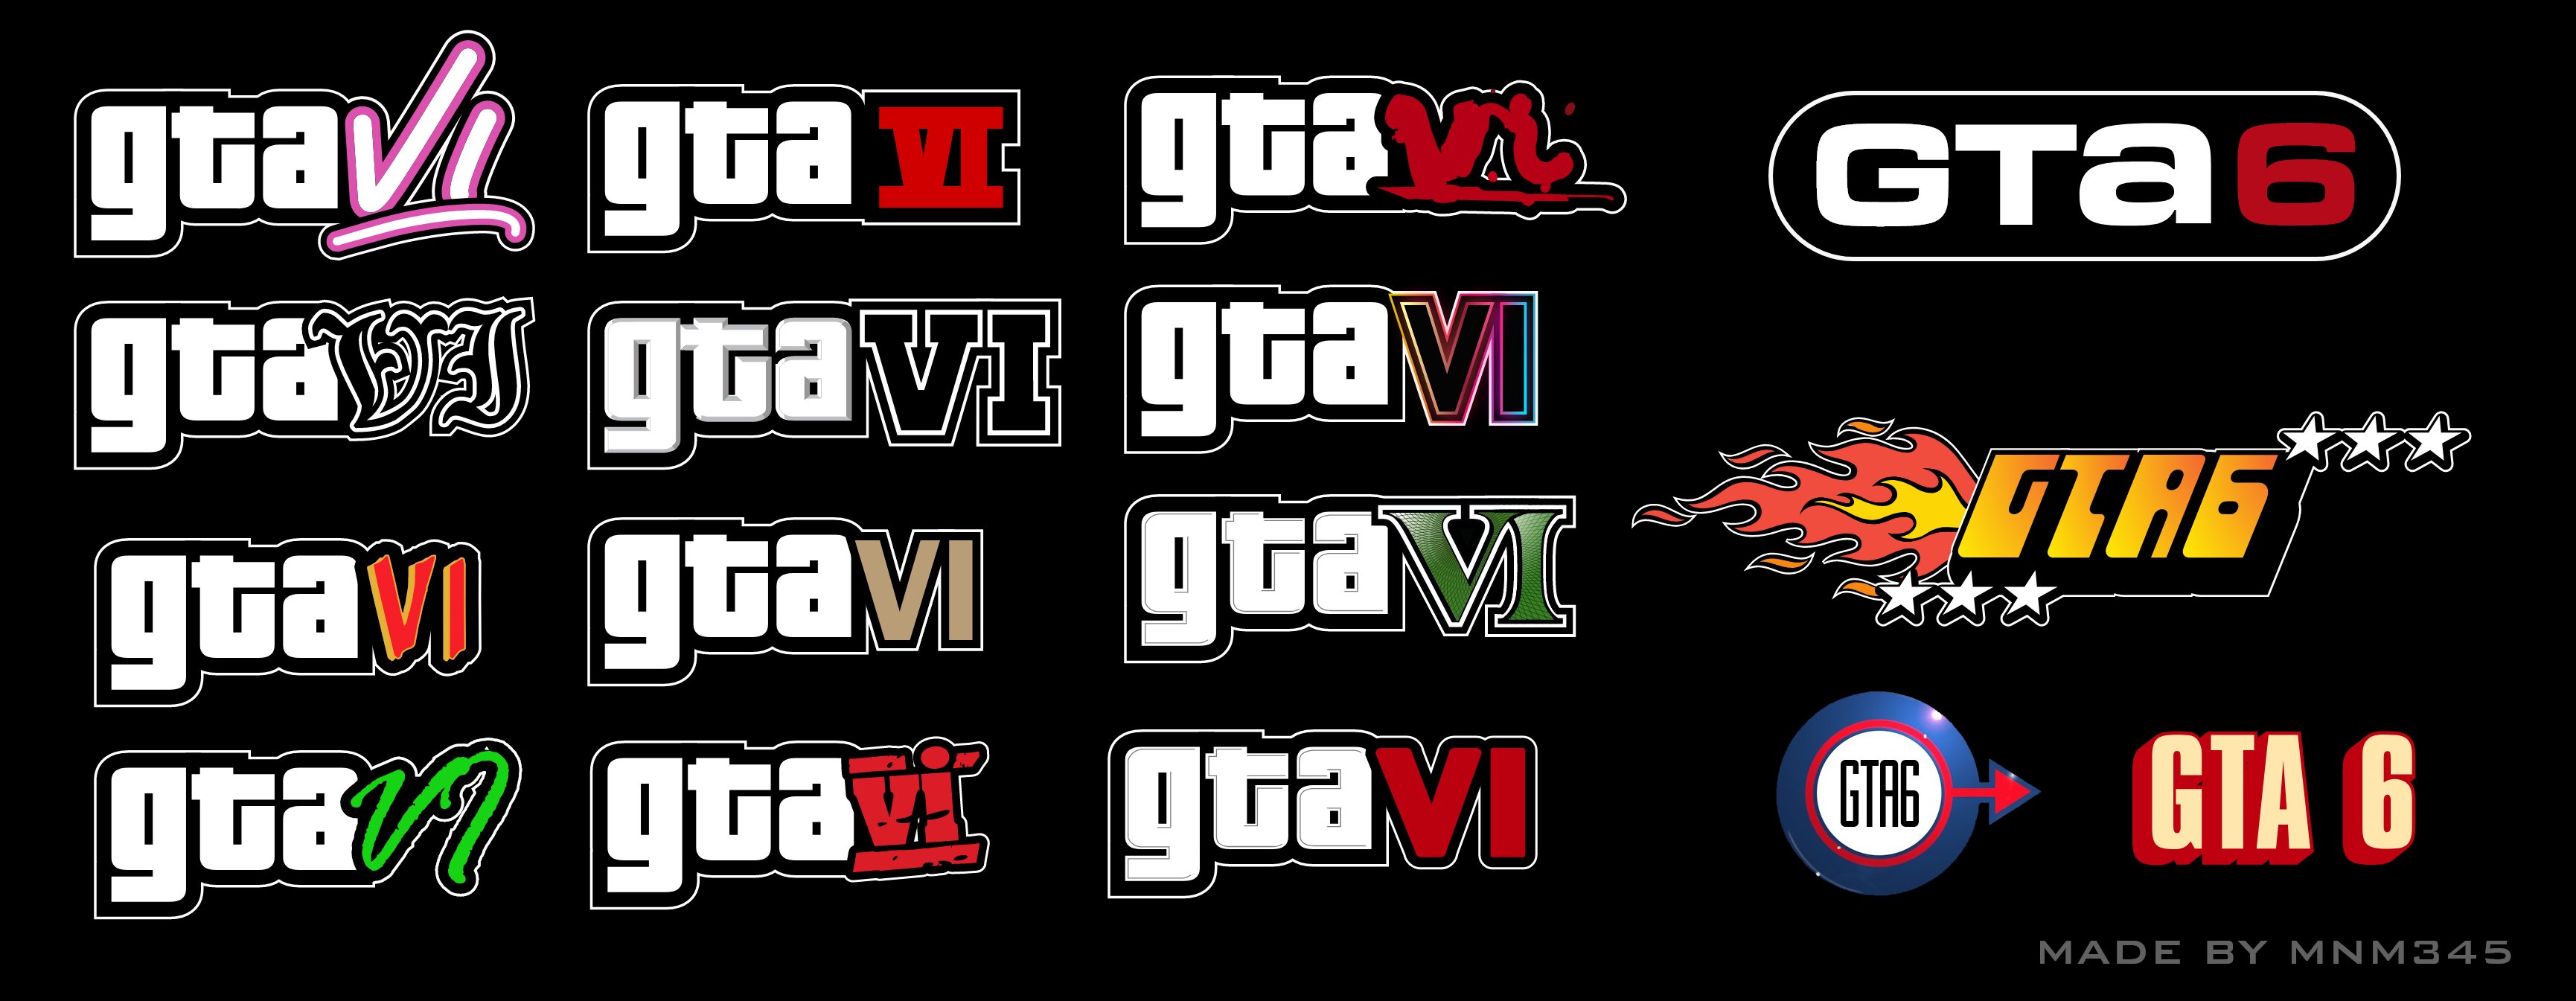 GTA VI Logos In Previous Styles By mnm345